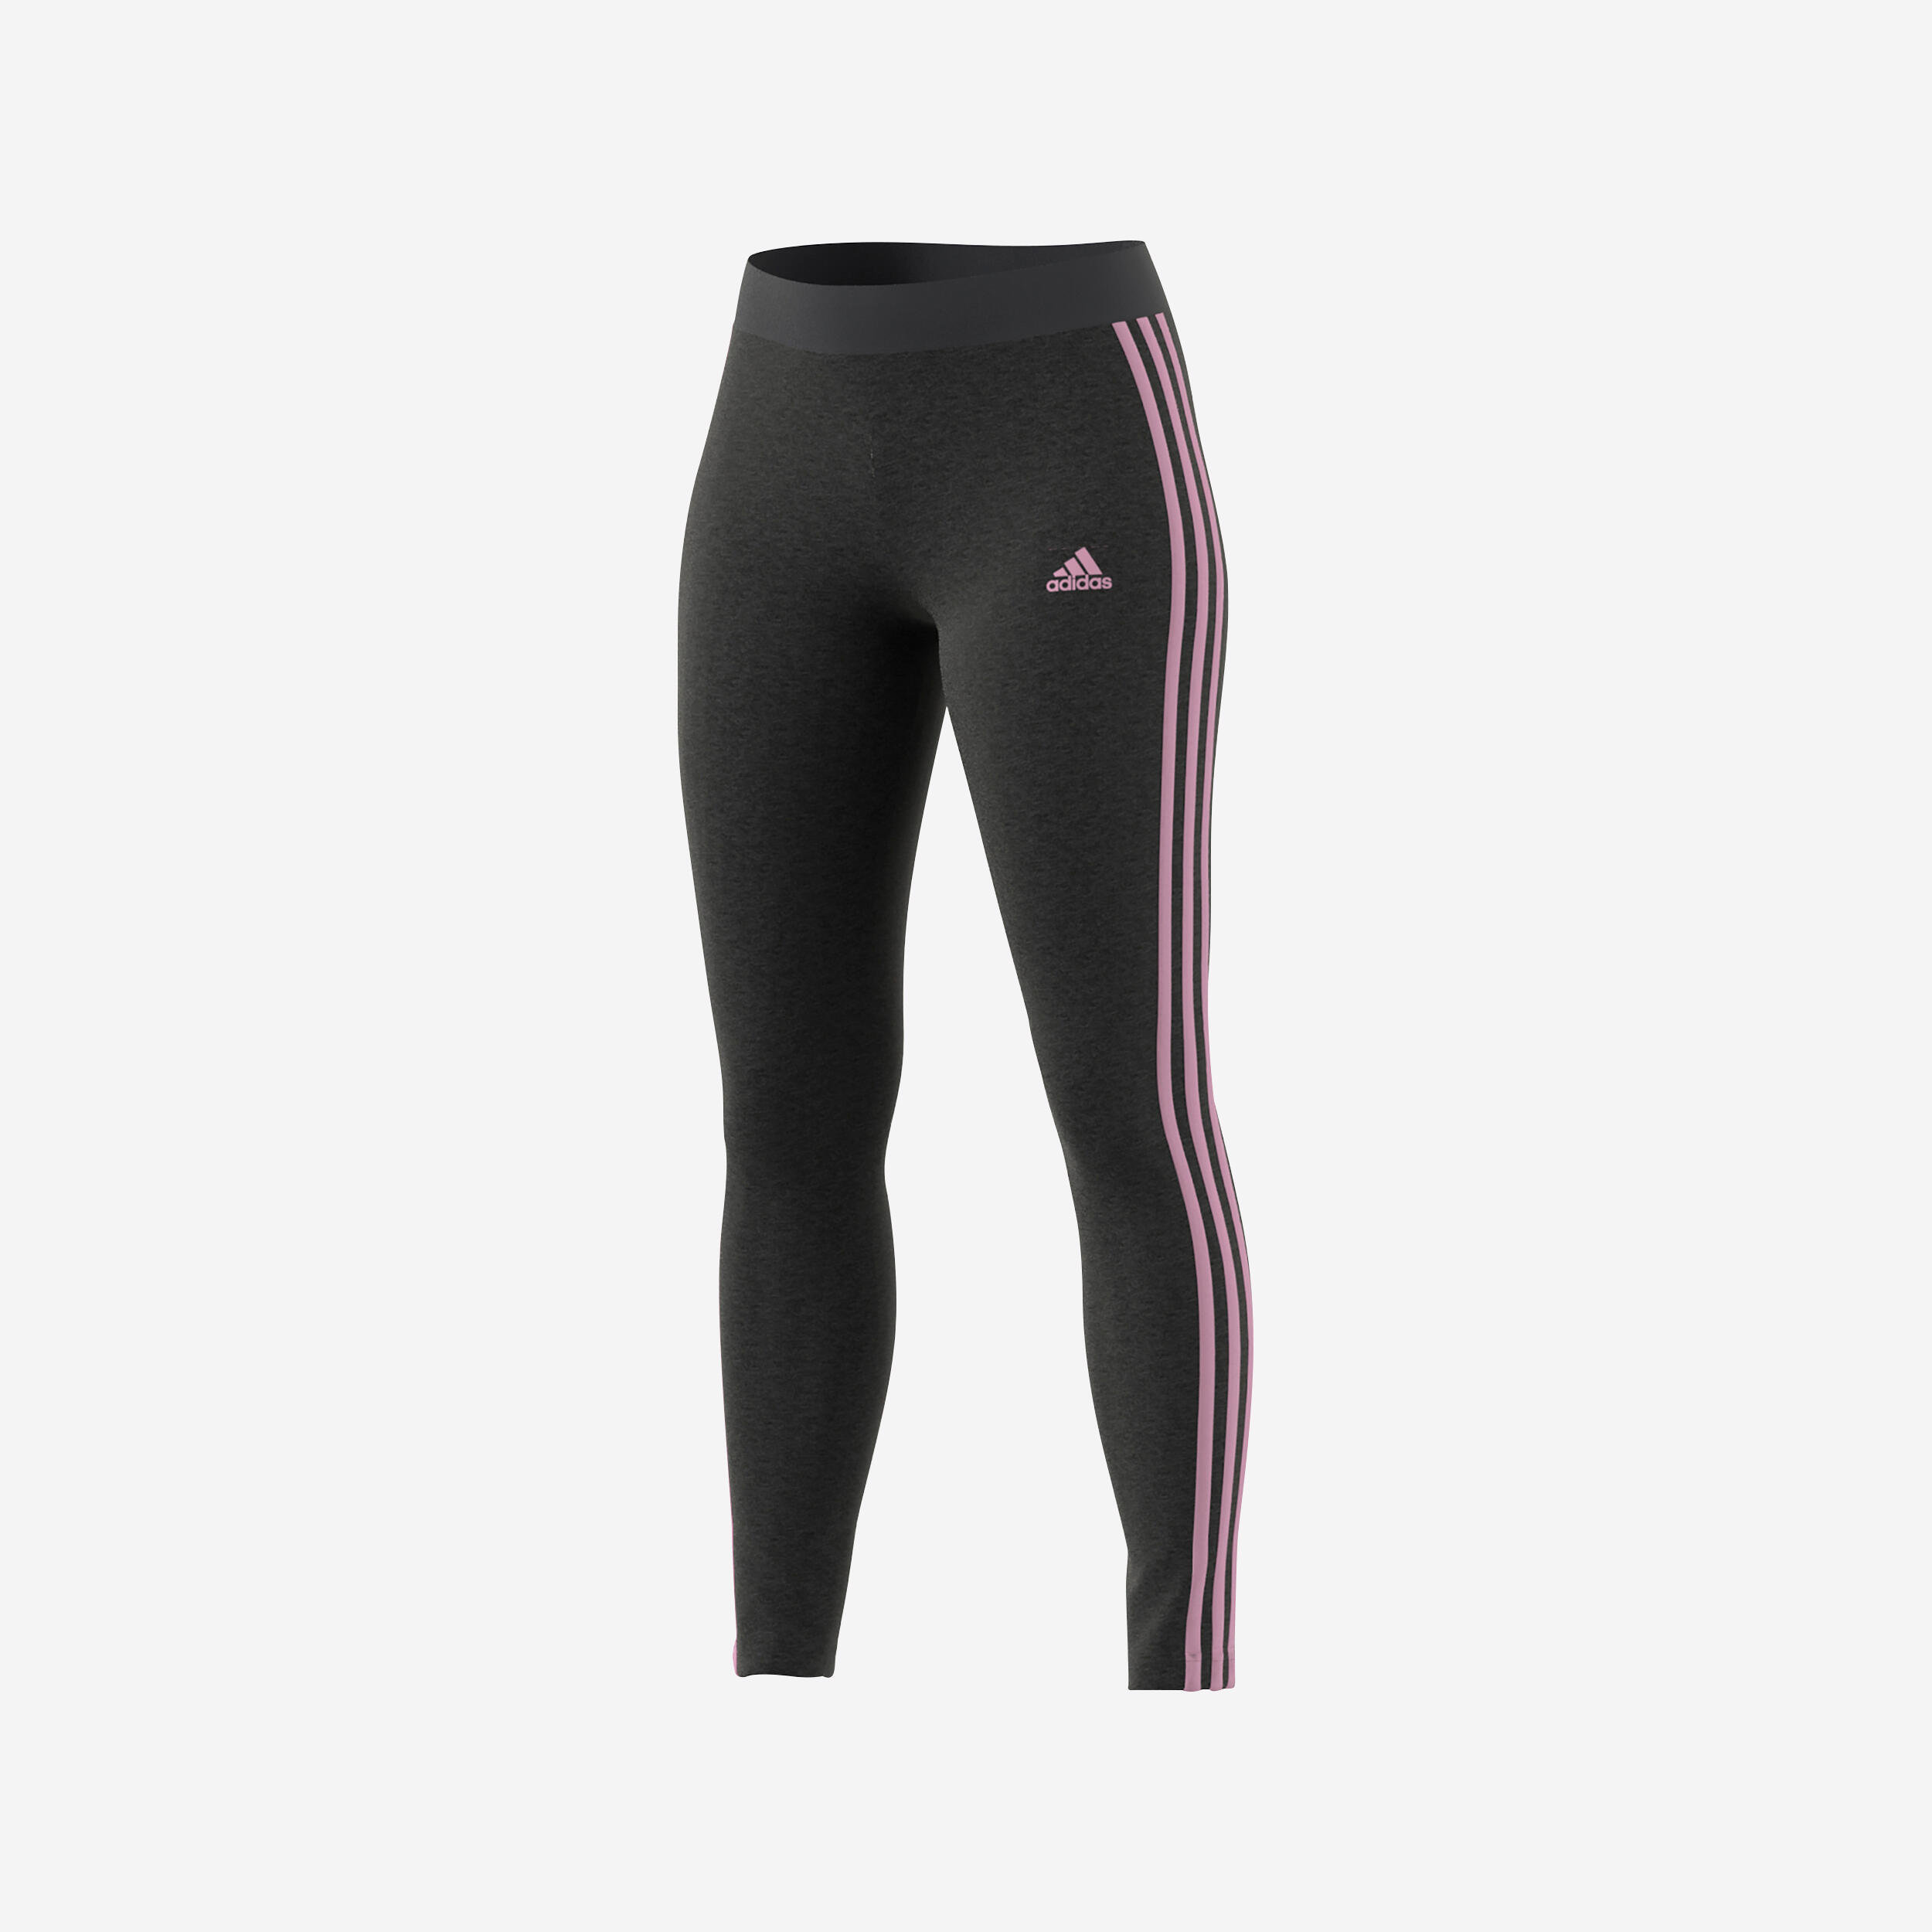 ADIDAS Women's Low-Impact Fitness Leggings - Grey/Pink